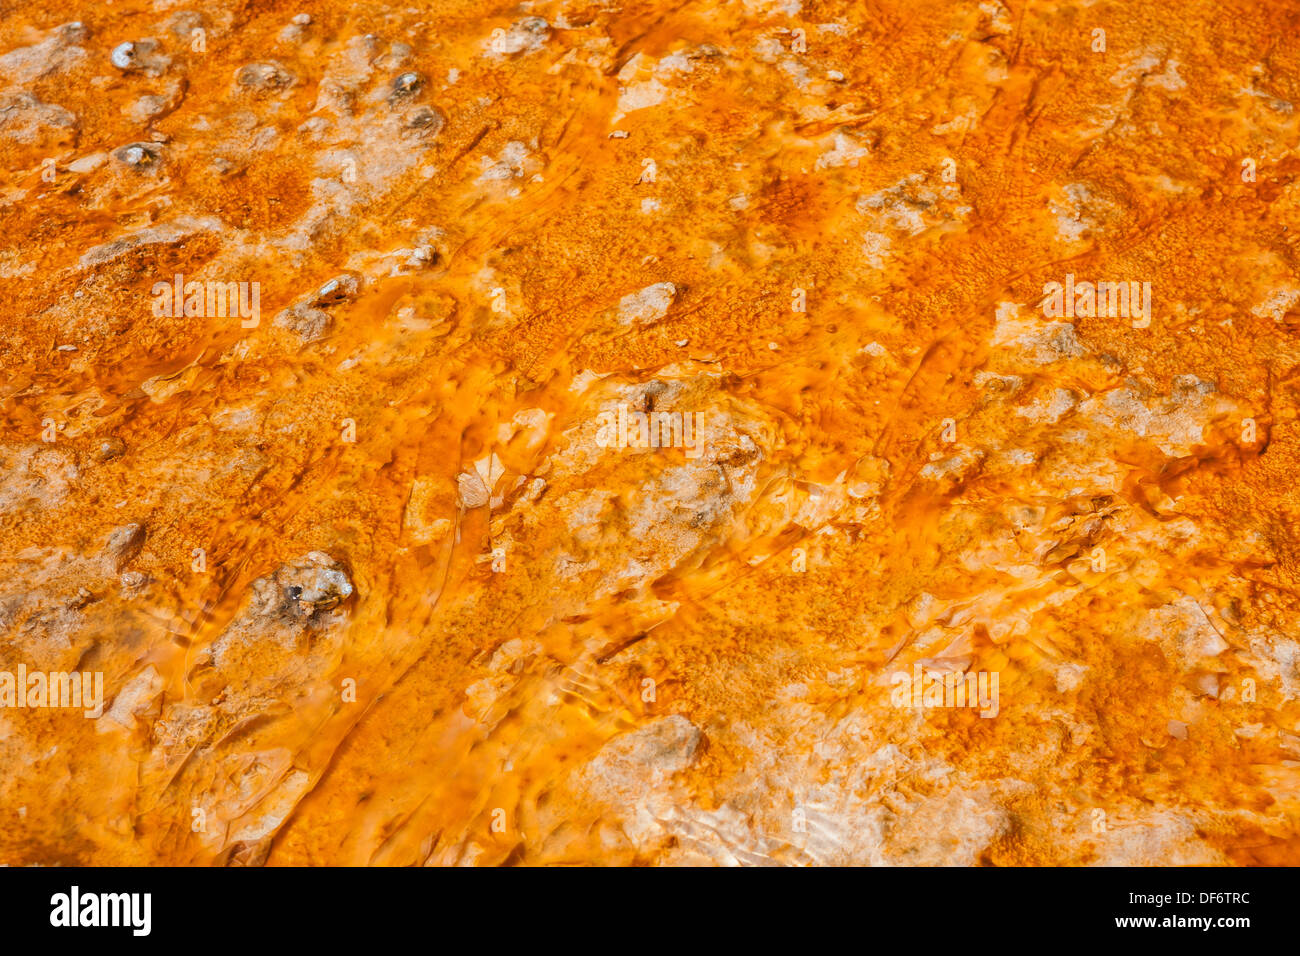 Bunte Bakterien mat umliegenden Grand Bildobjekte Frühling, Midway Geyser Basin, Yellowstone-Nationalpark, Wyoming Stockfoto